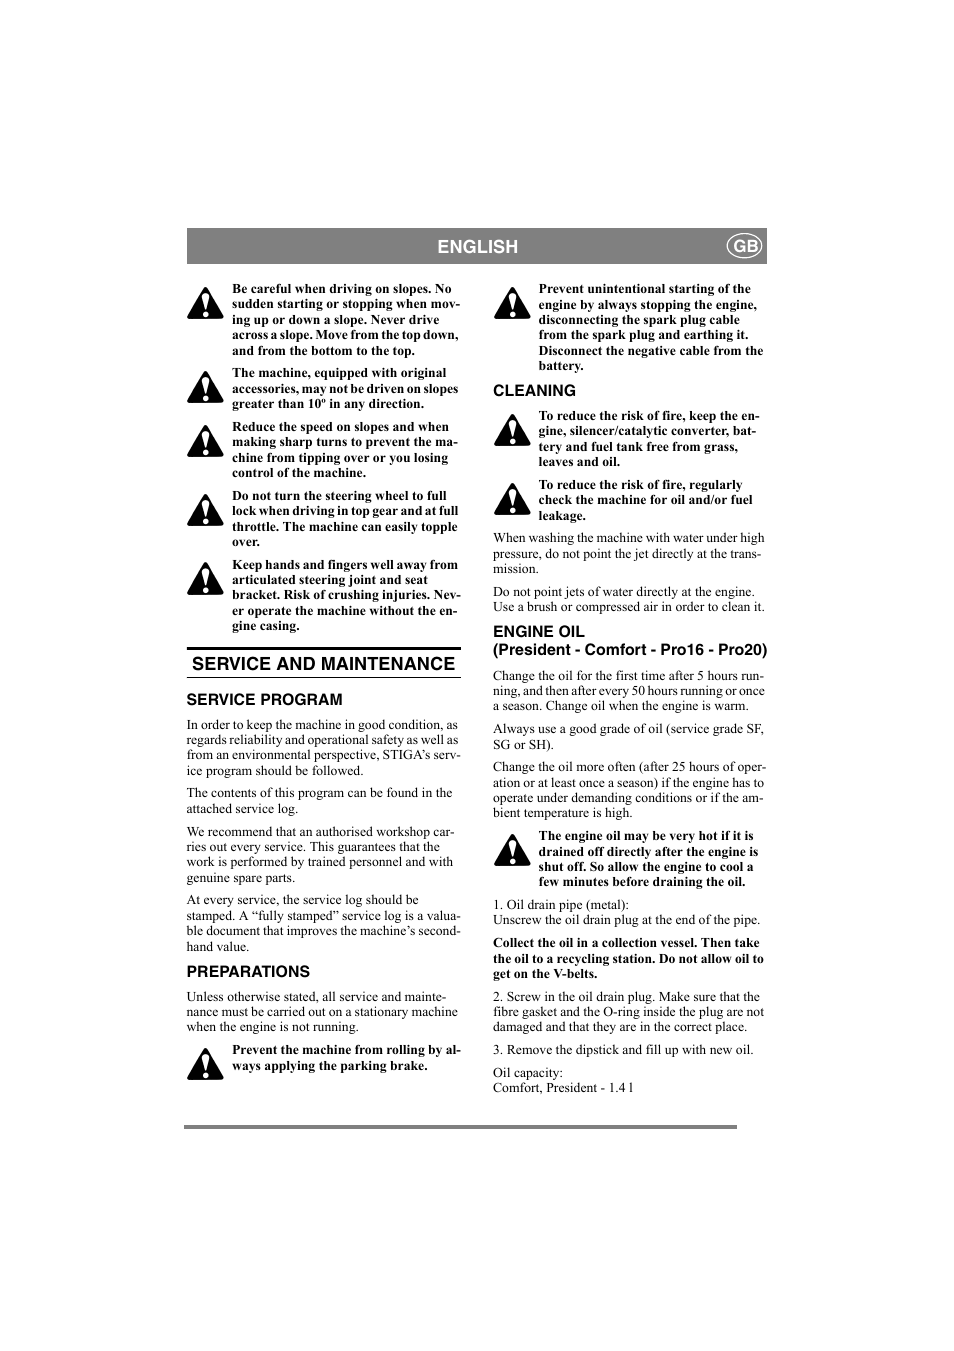 English, Service and maintenance | Stiga PARK PRO 20 User Manual | Page 12  / 16 | Original mode